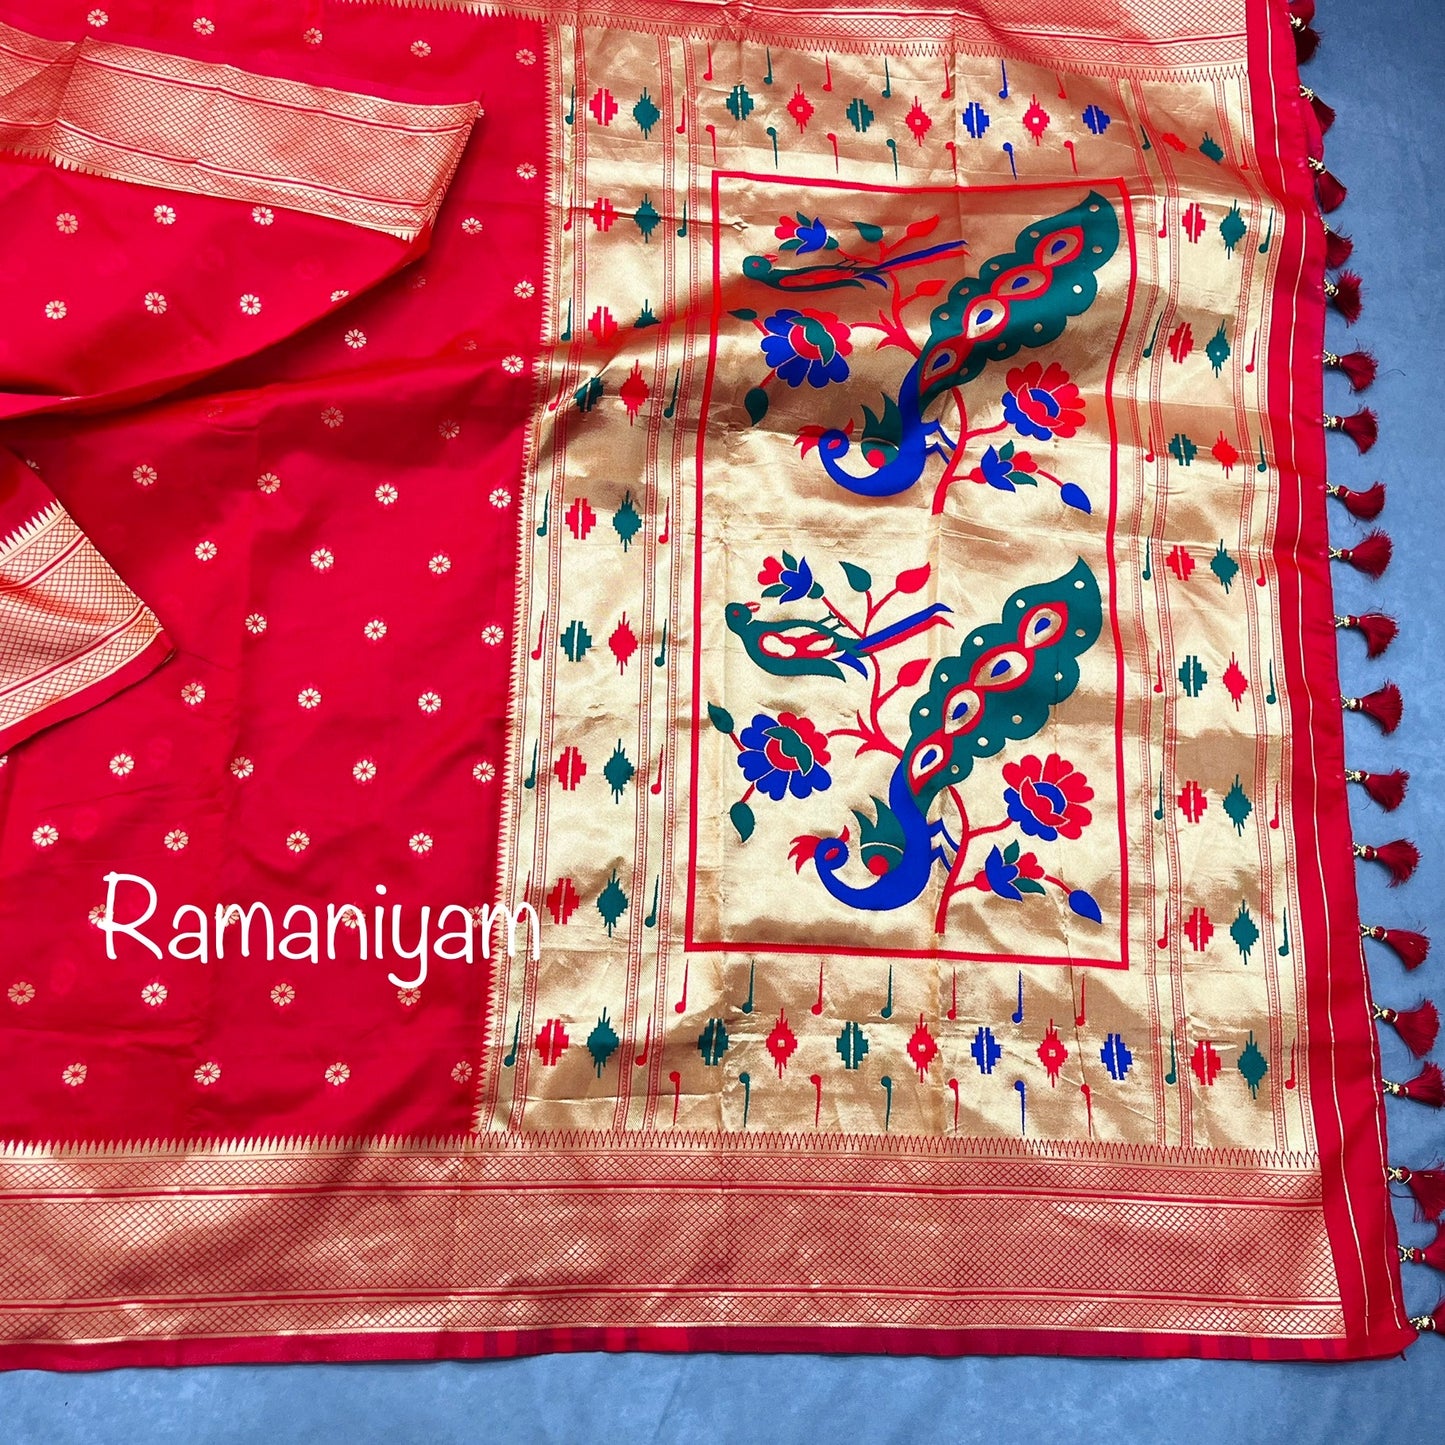 Royal red maharani Paithani saree with pattern blouse